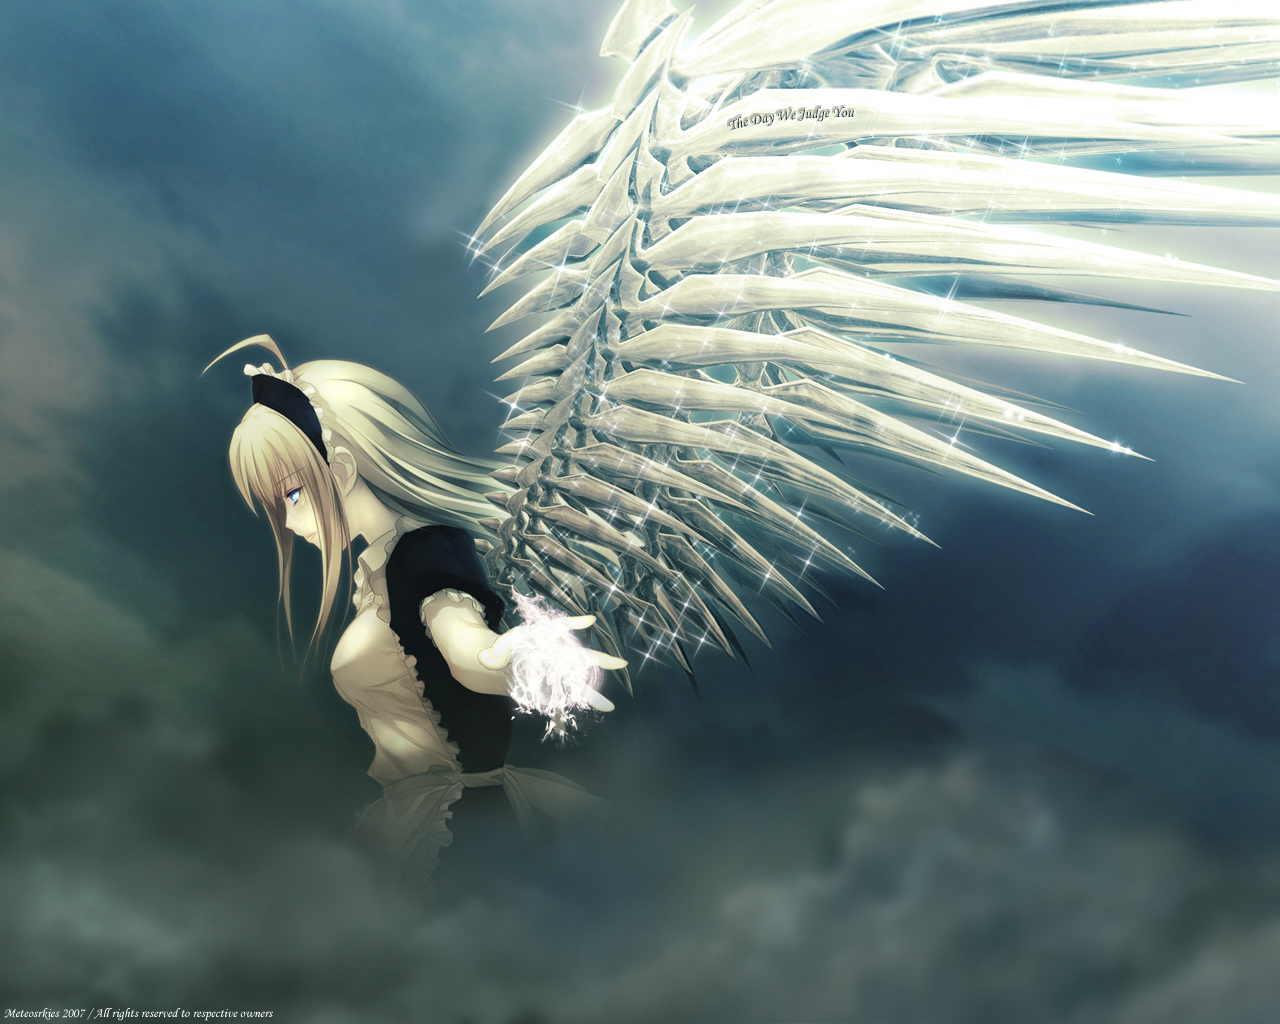 3d обои Девушка ангел с хрустальными крыльями в темных небесах (Metcosrkies 2007  / All right reserved to respective owners)  манга # 53120